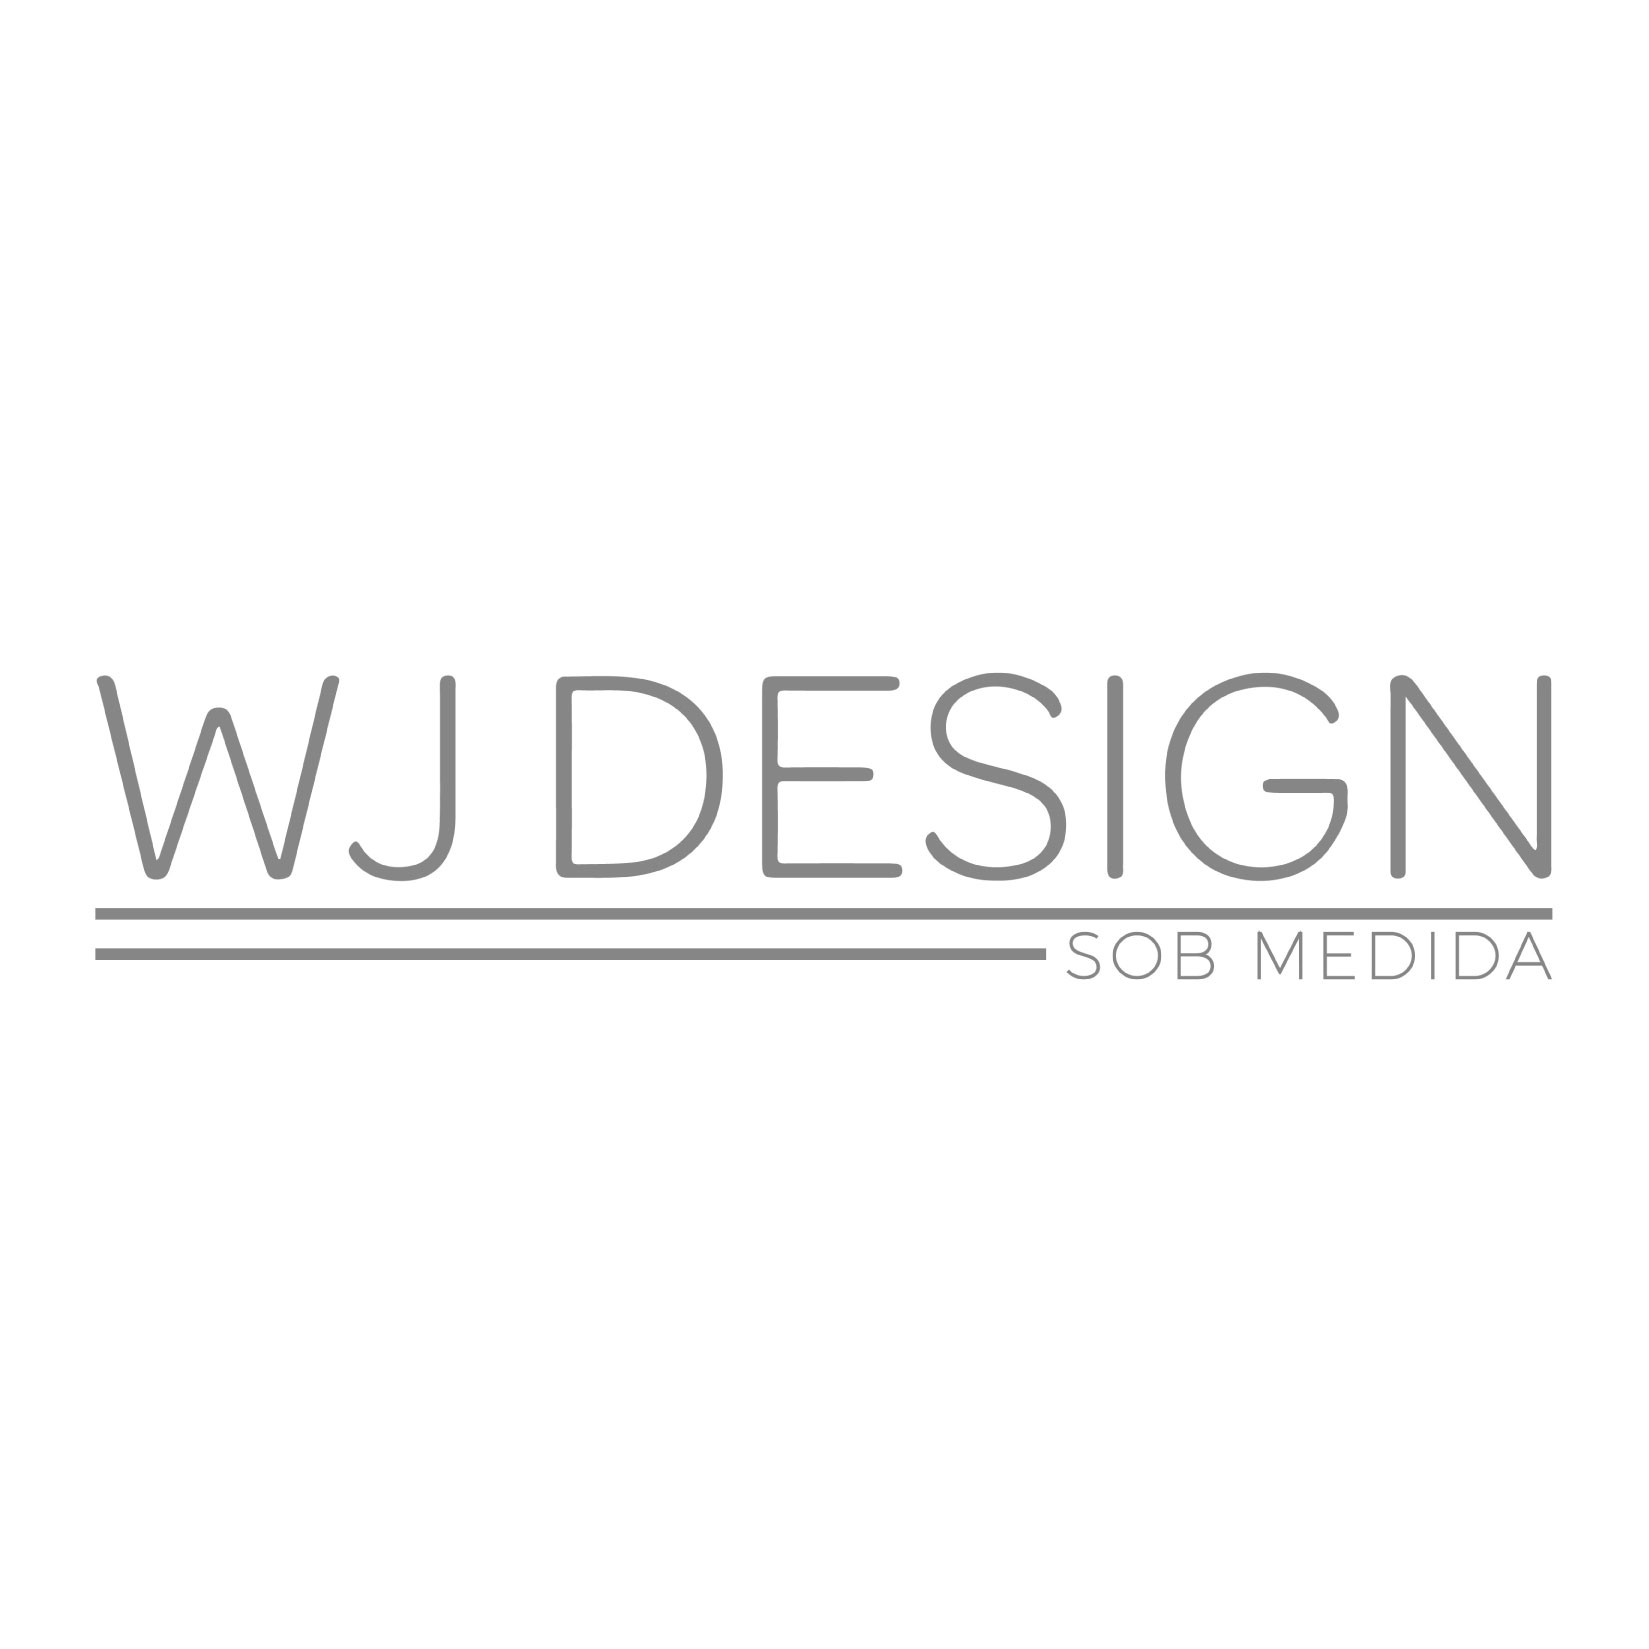 Logo WJ Design Sob Medida